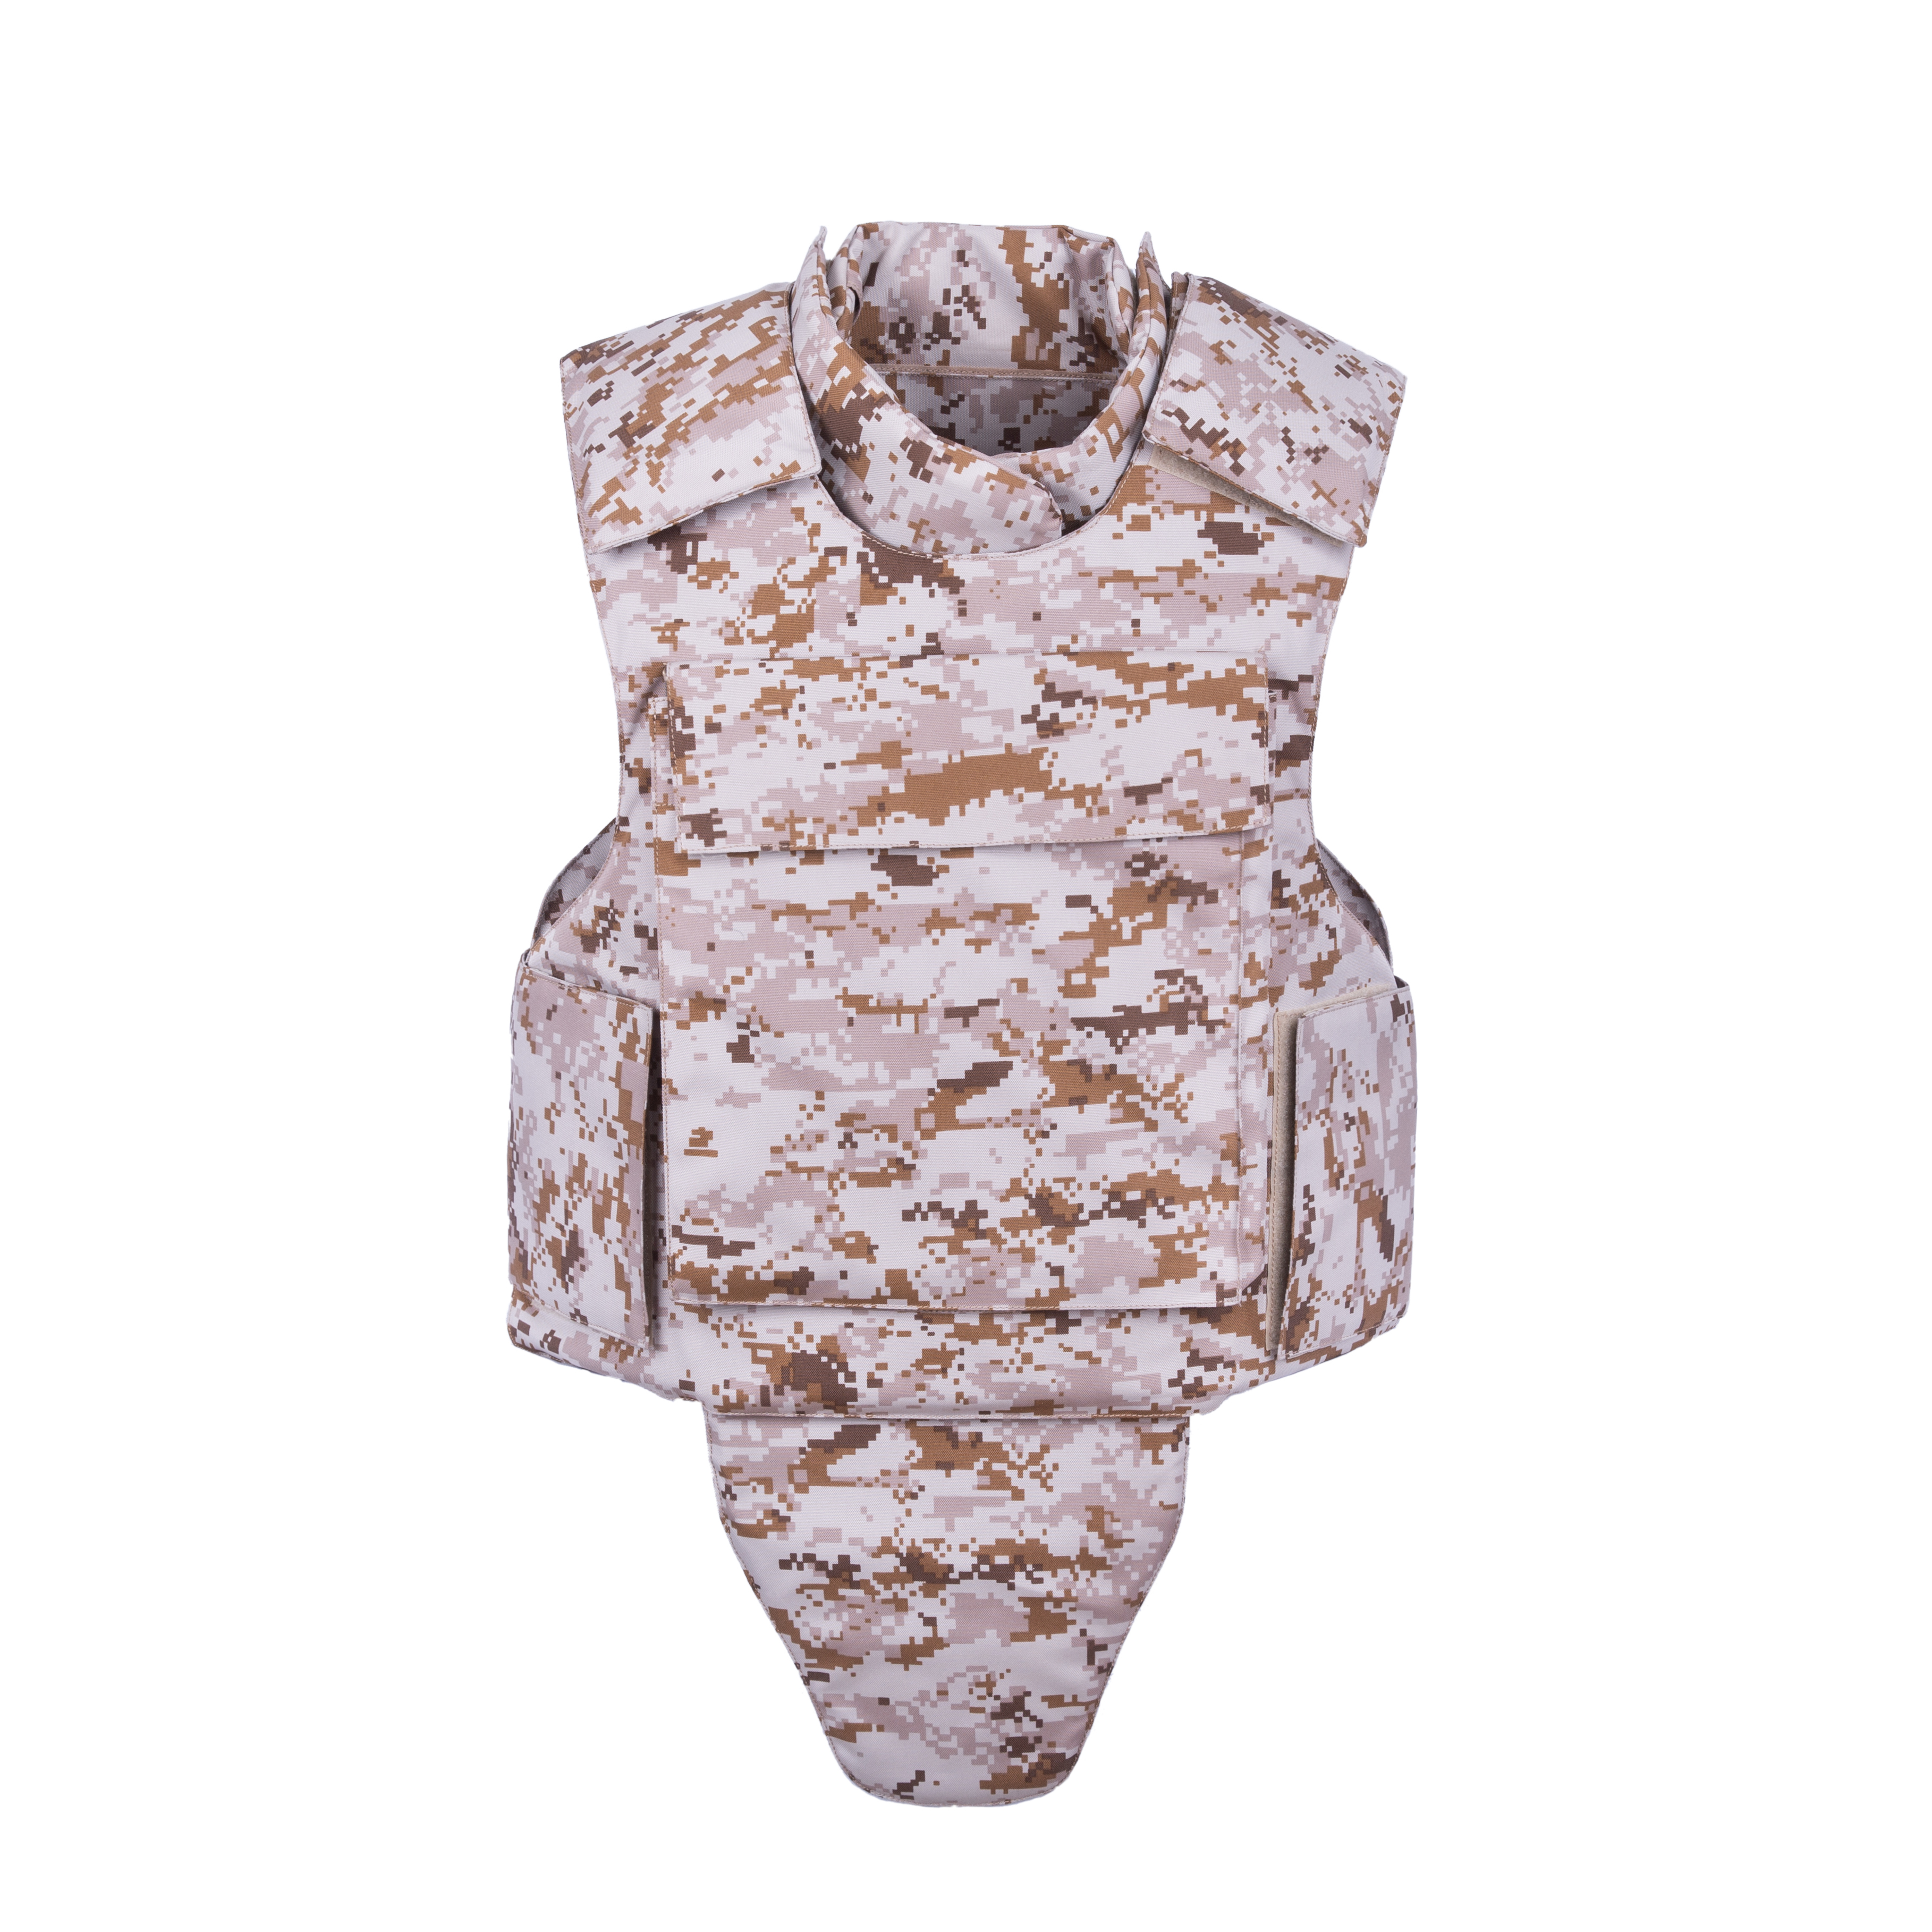 Level 3a soft body armor ballistic vest